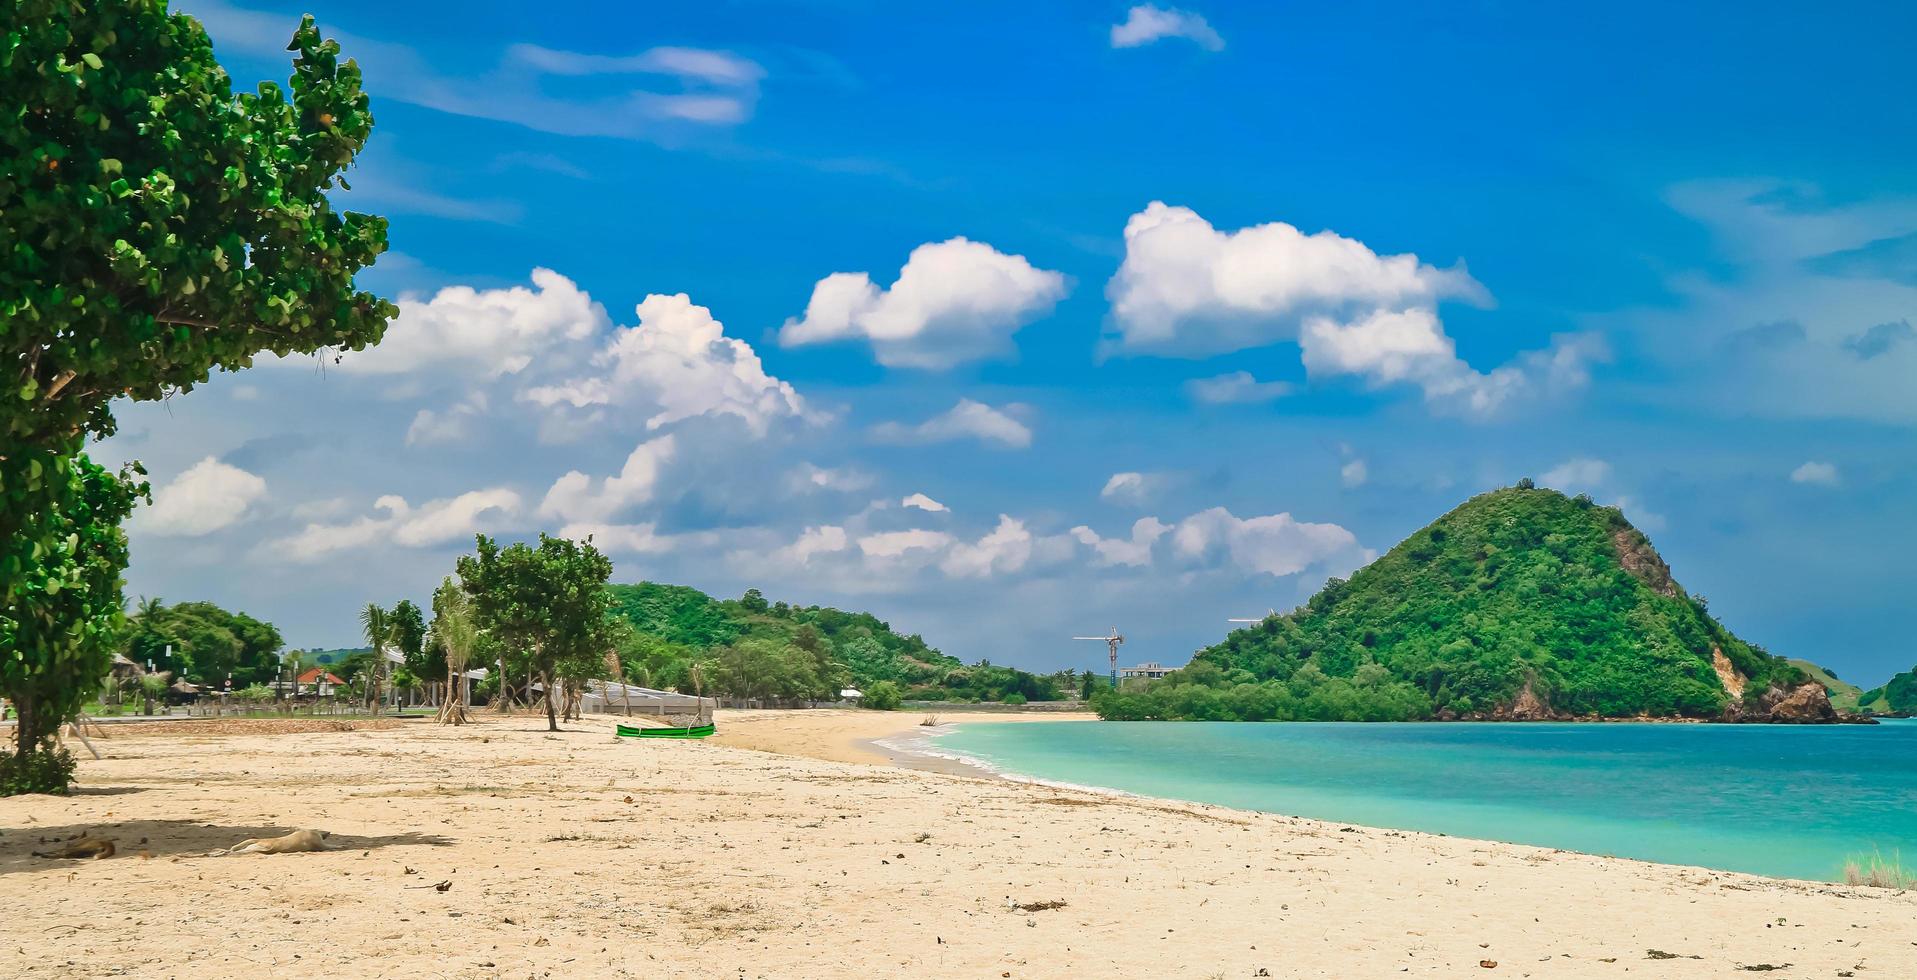 a beleza da praia mandalika na ilha de lombok, indonésia foto